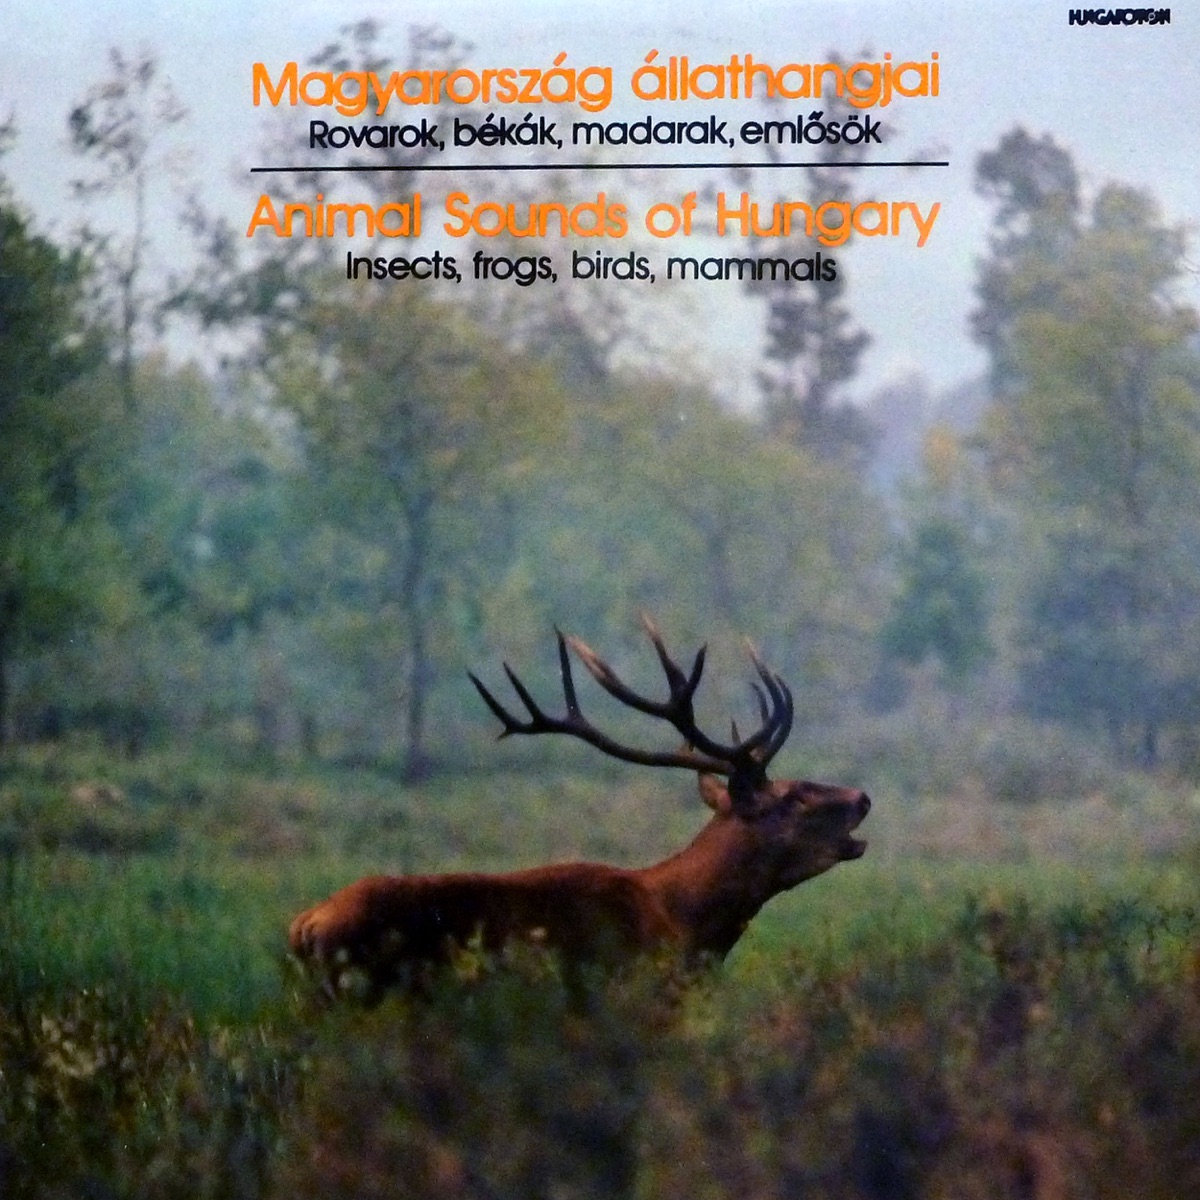 Magyarország állathangjai (Hungaroton Classics) by Ország Mihály on Apple  Music